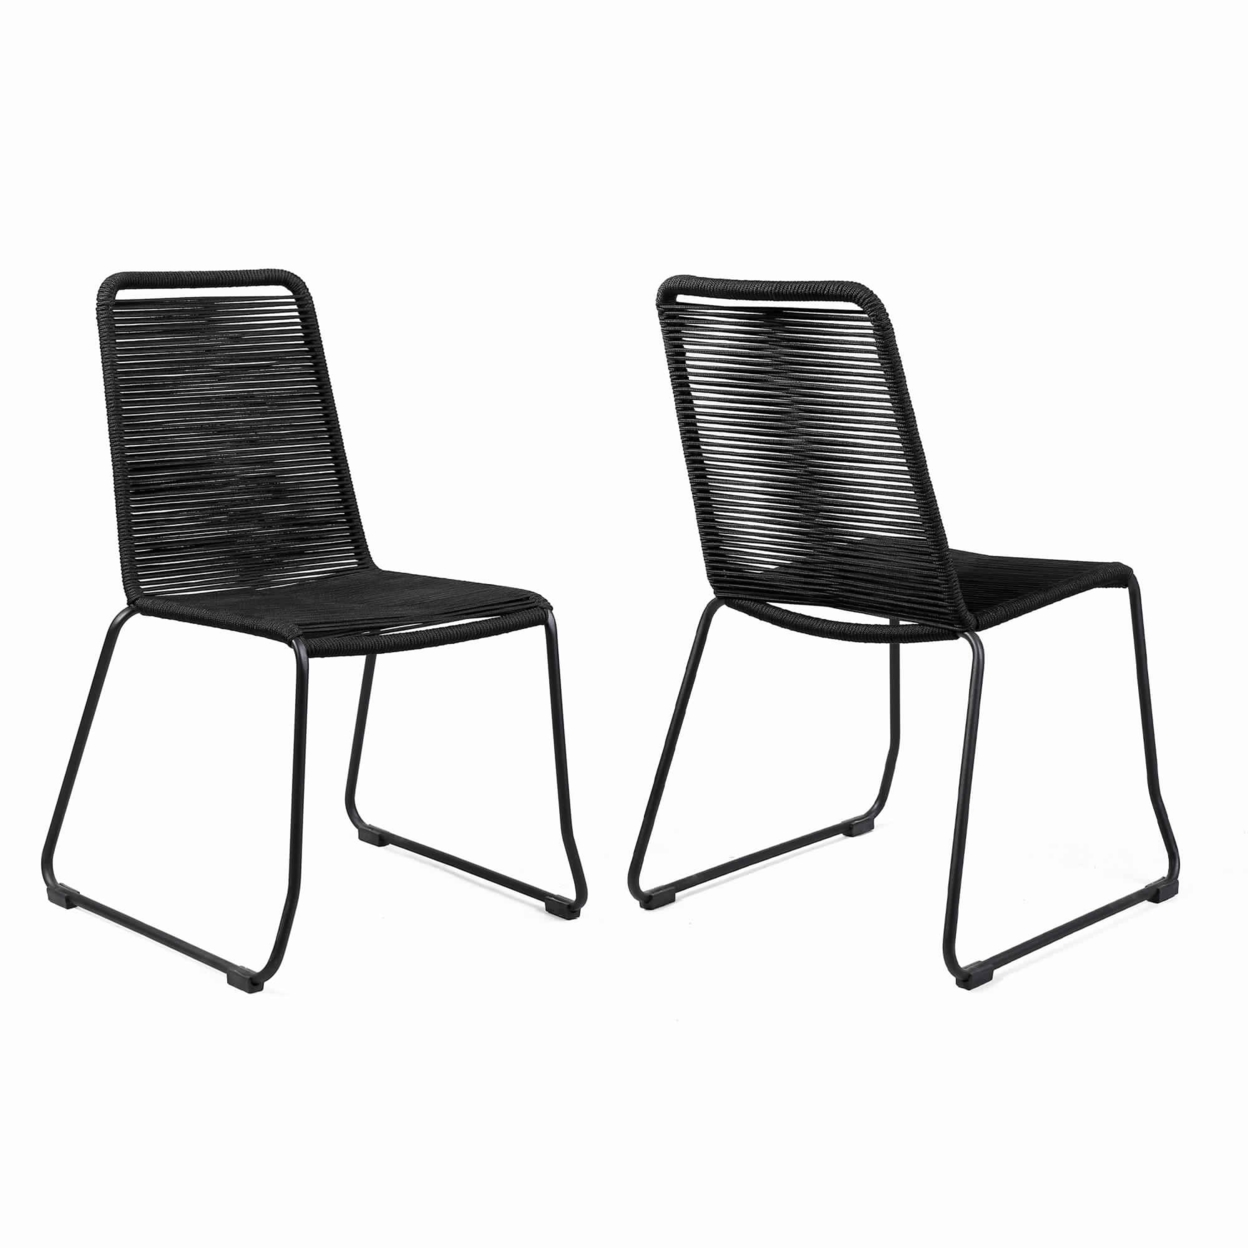 Metal Outdoor Dining Chair With Fishbone Weave, Set Of 2, Black- Saltoro Sherpi